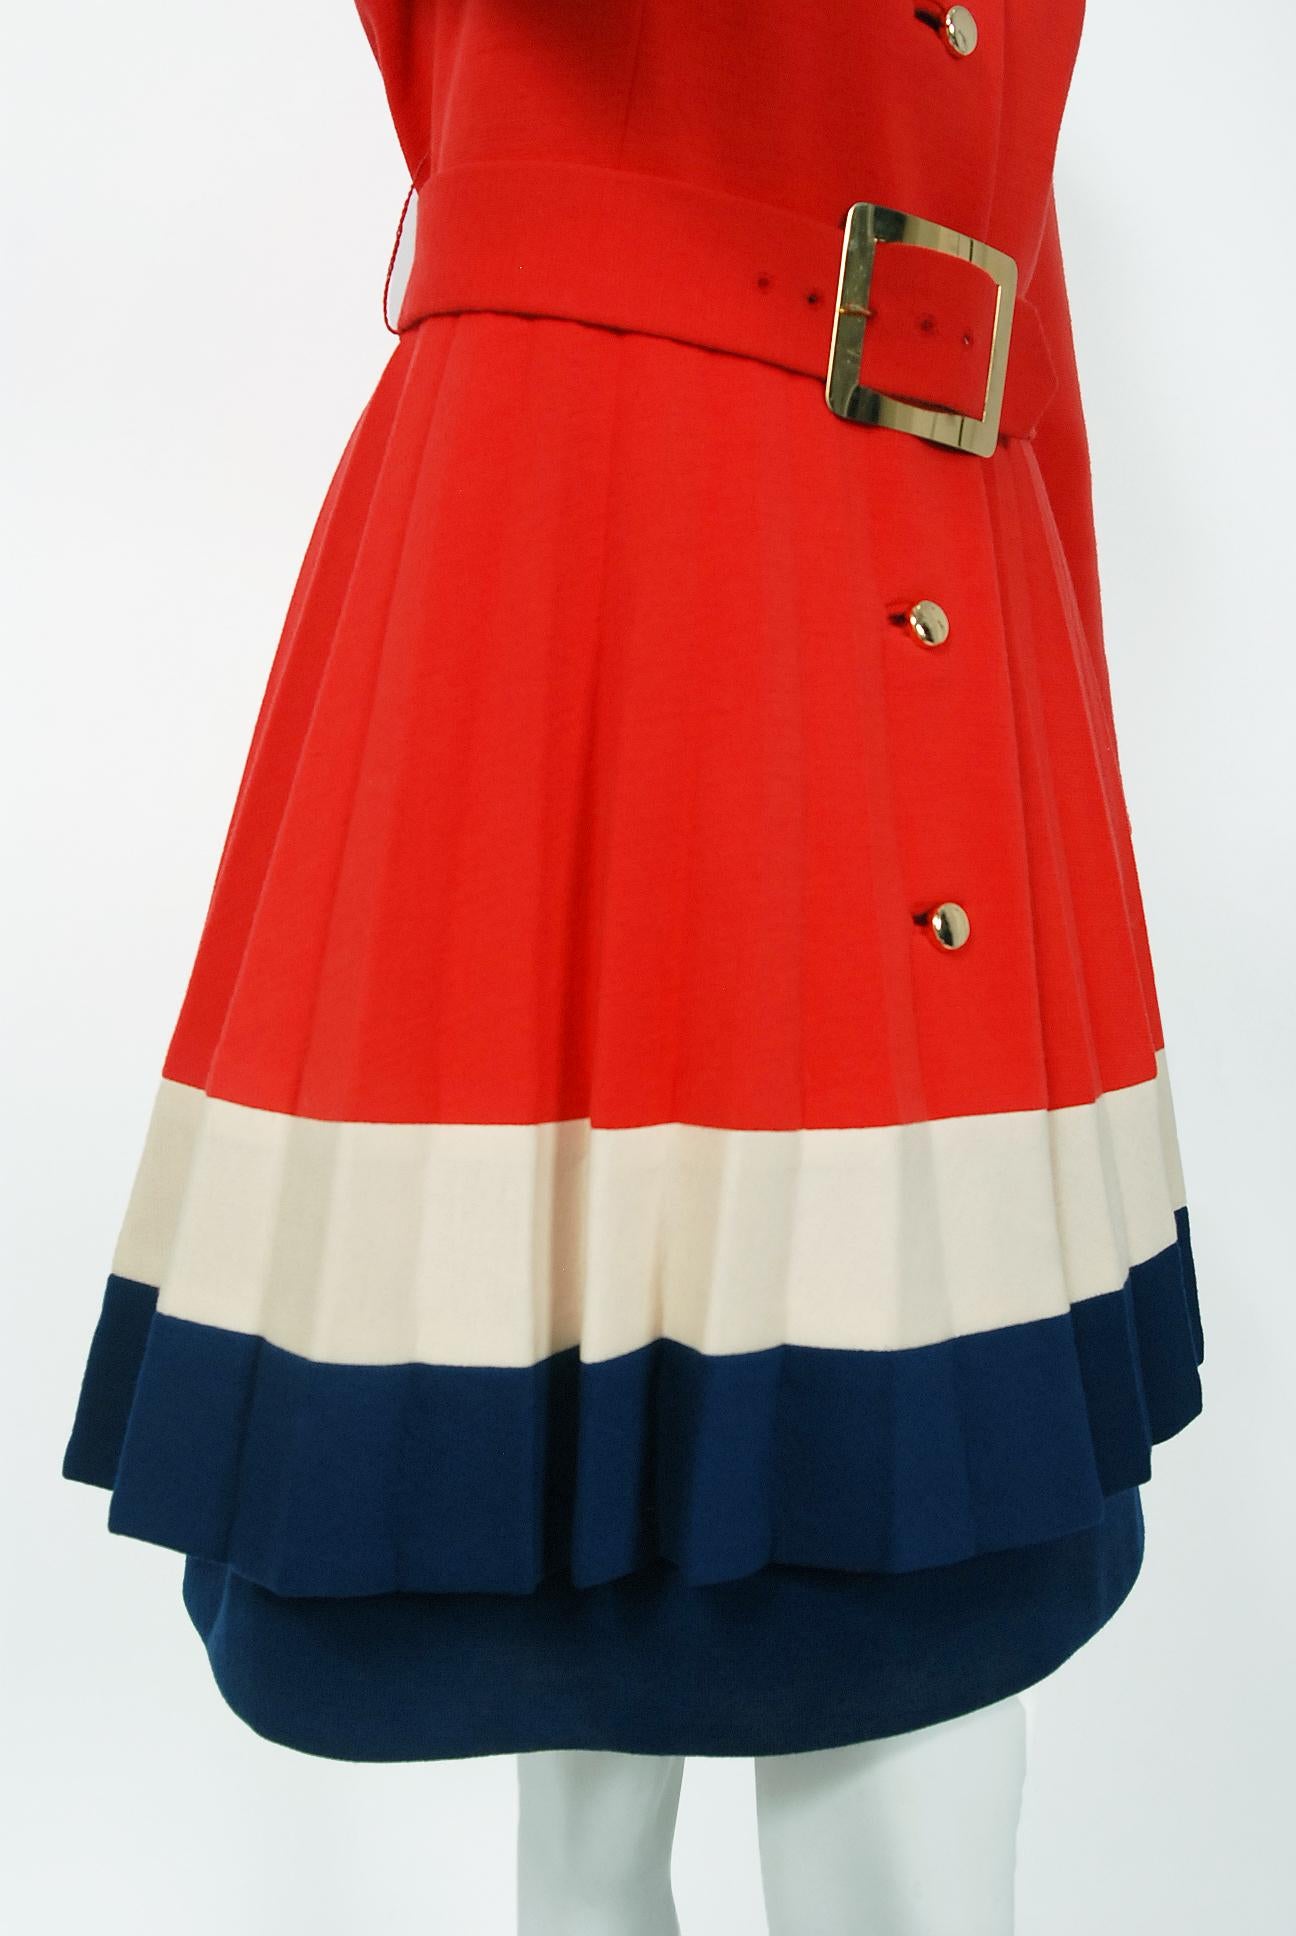 red white blue dress